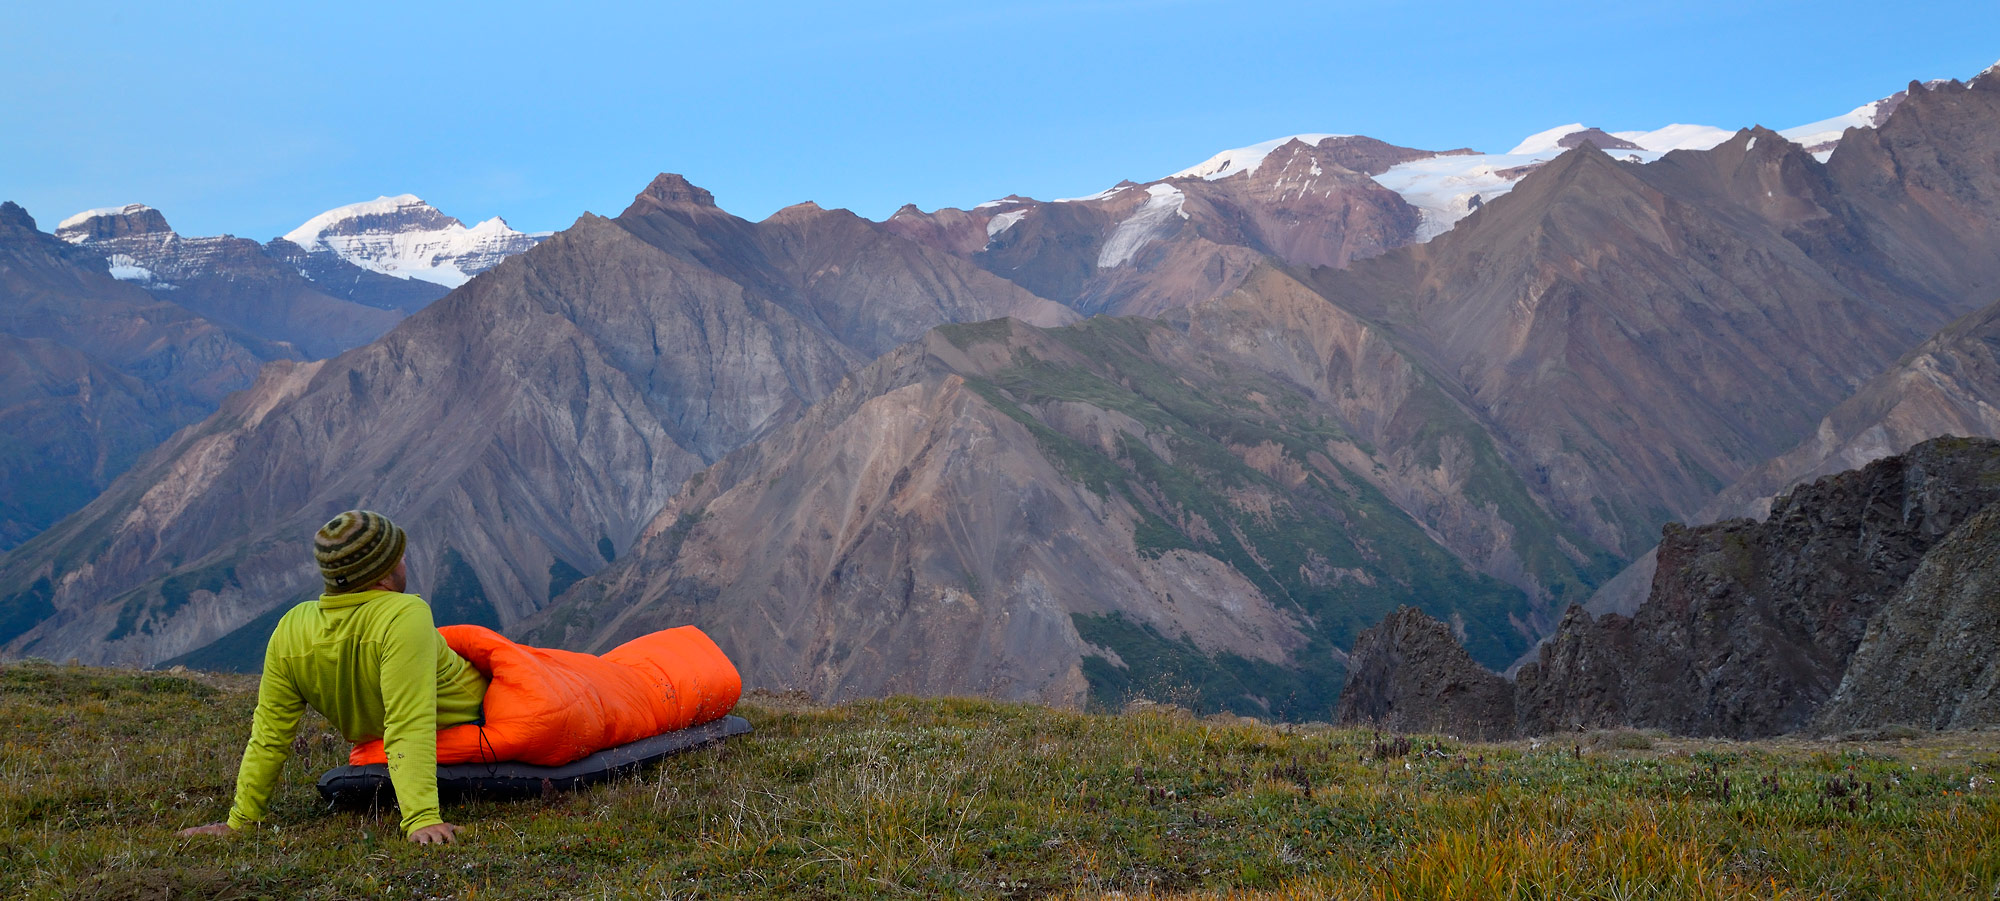 camper looking at University Range, Goat Trail trip, Wrangell - St. Elias National Park, Alaska.